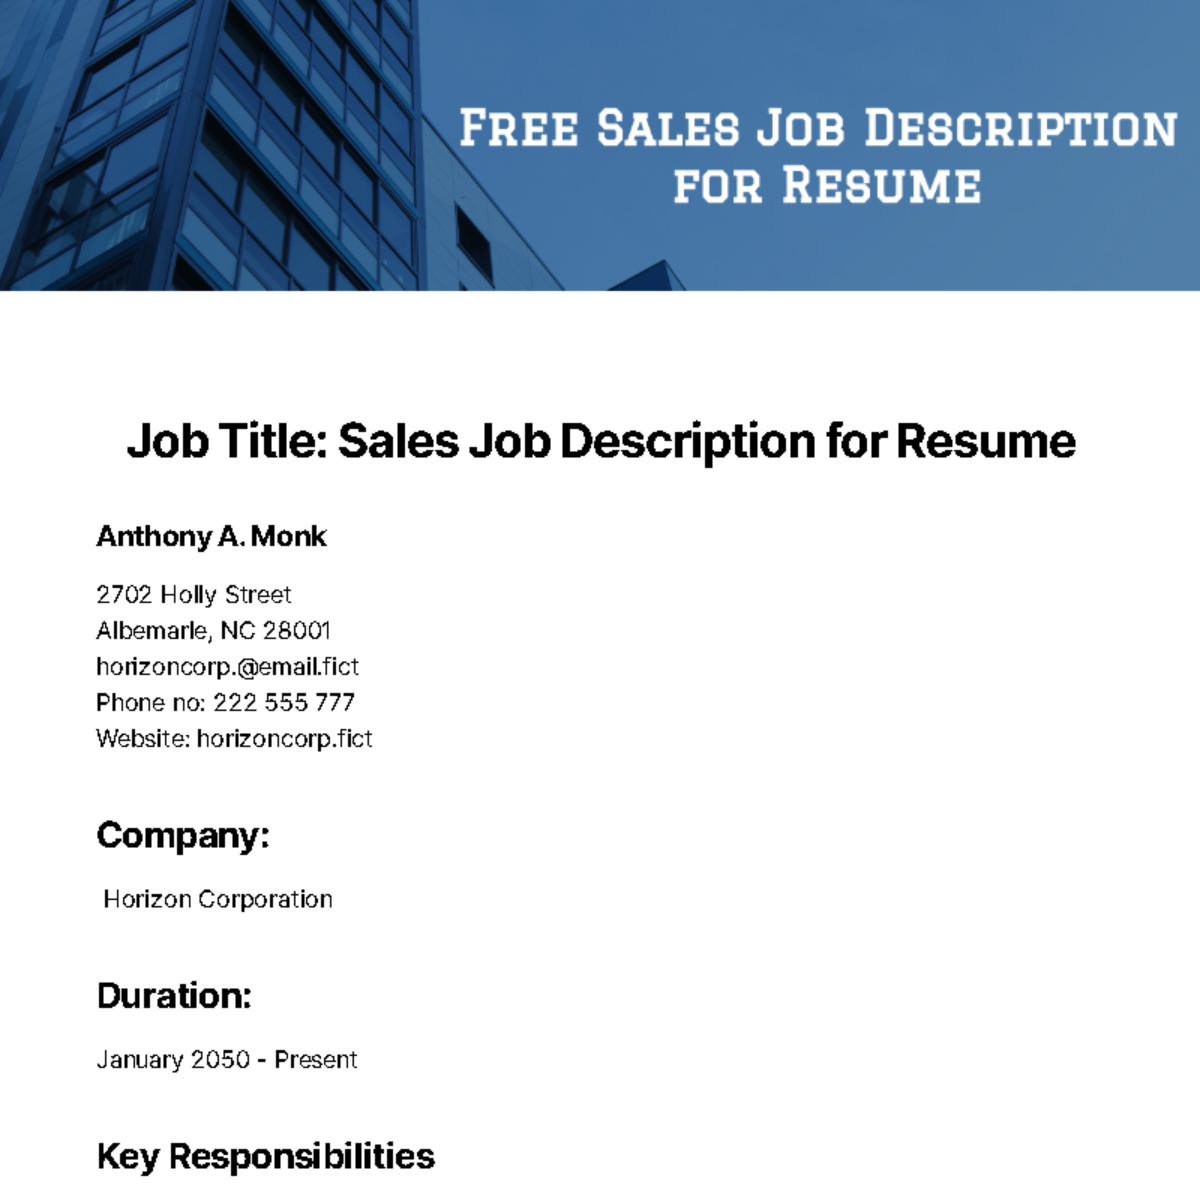 Sales Job Description for Resume Template